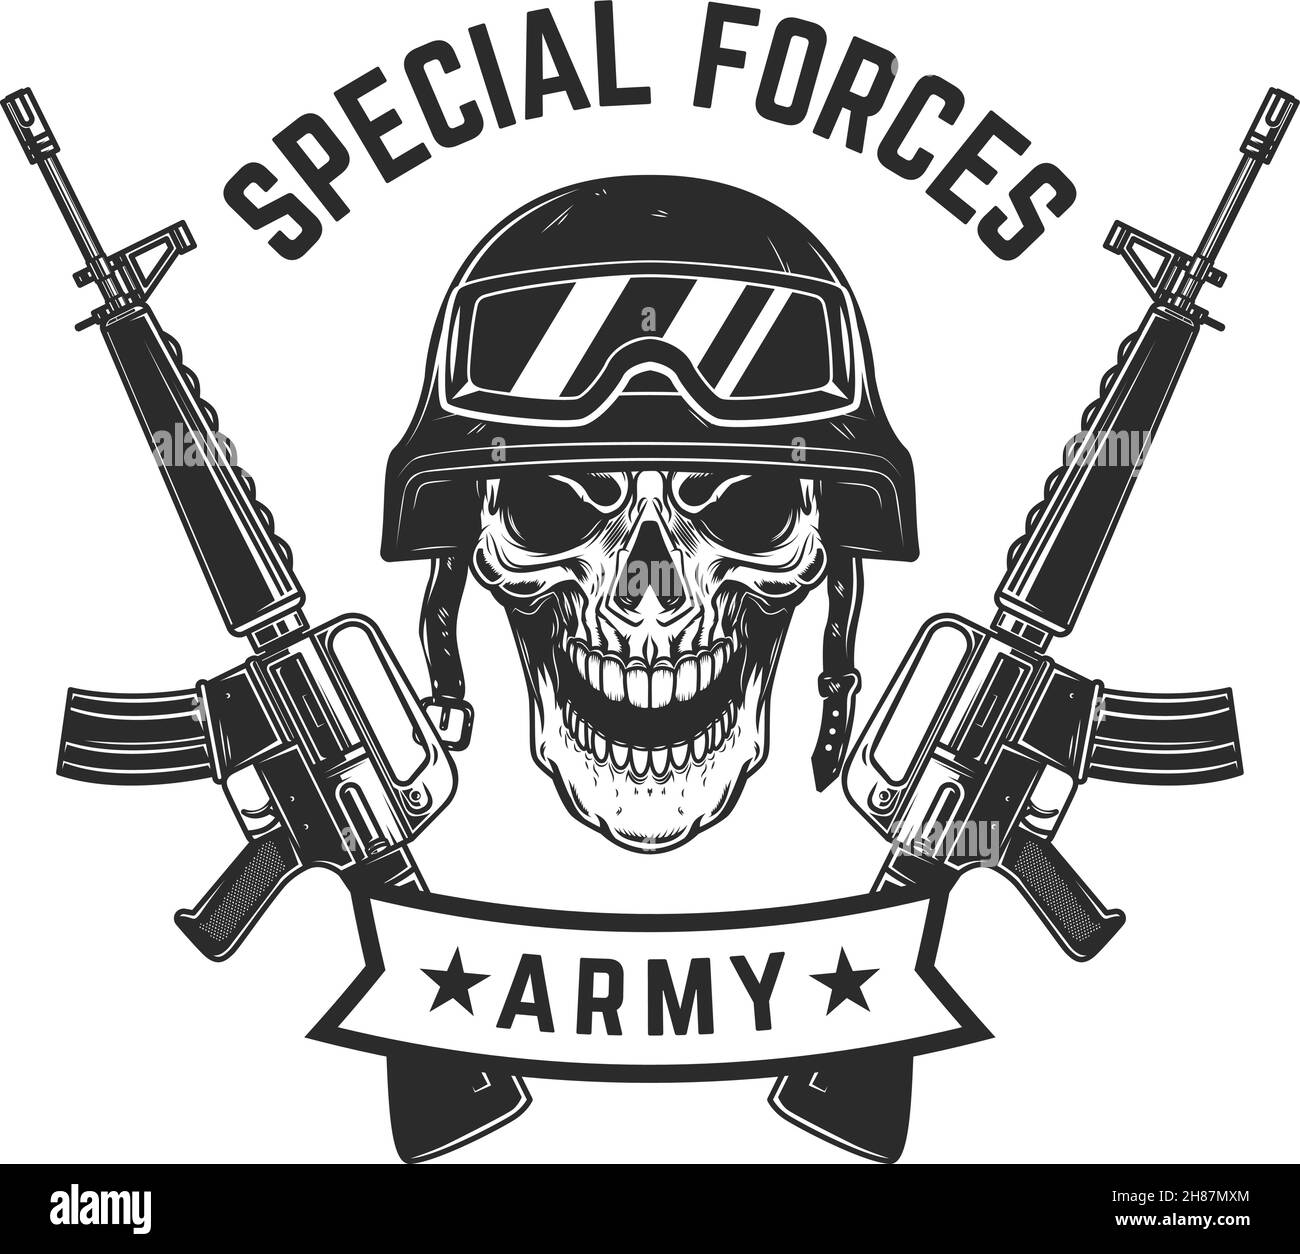 Special forces. Crossed assault rifles with soldier skull in military helmet. Design element for logo, label, sign, emblem. Vector illustration Stock Vector